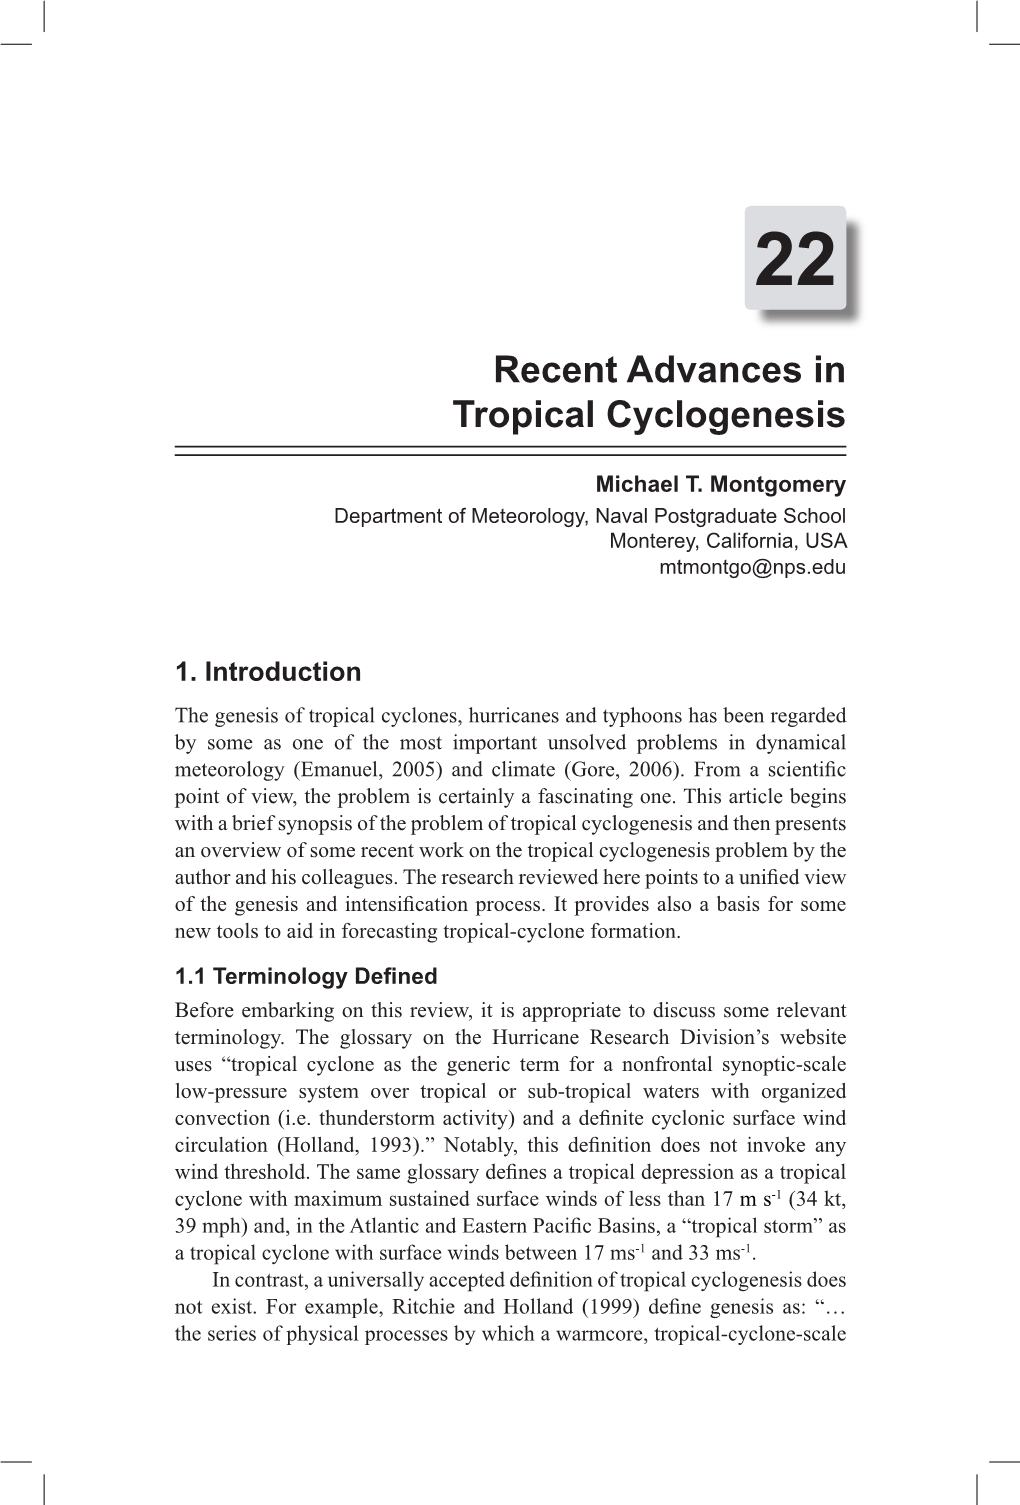 Recent Advances in Tropical Cyclogenesis